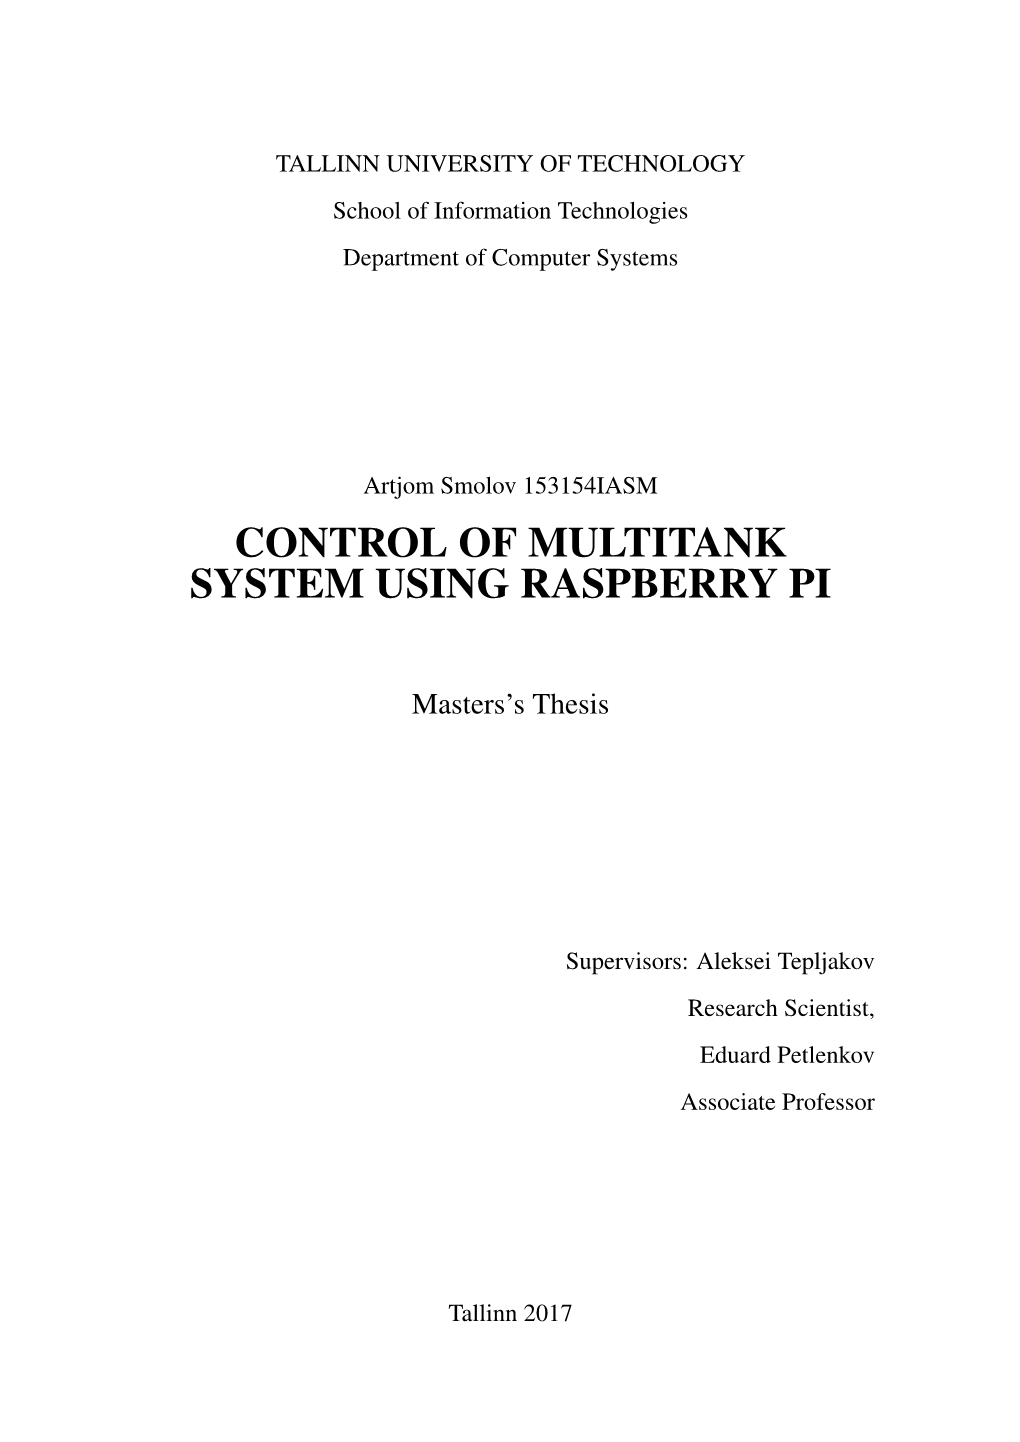 Control of Multitank System Using Raspberry Pi